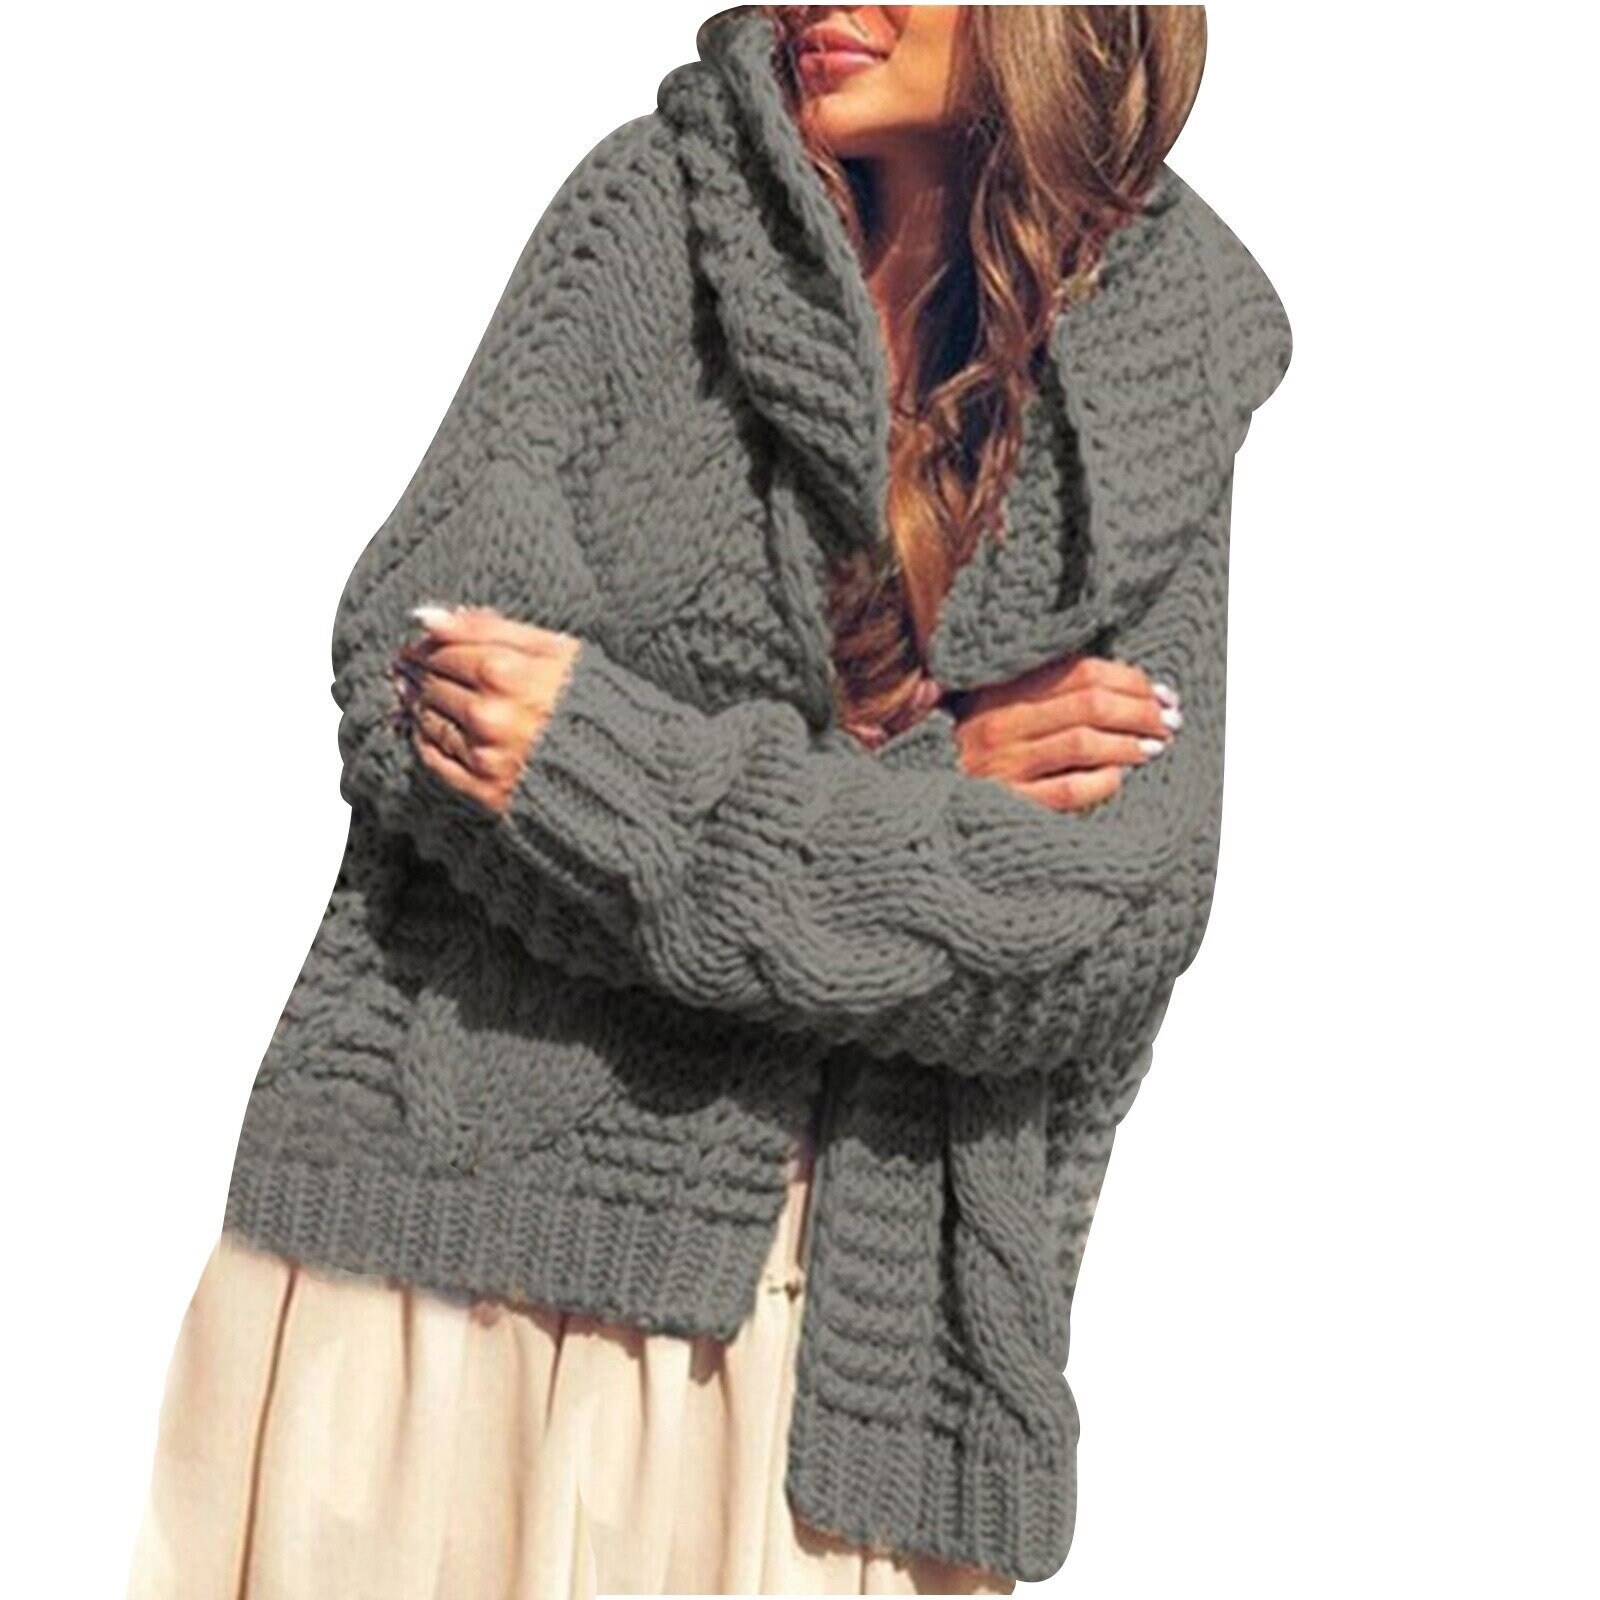 Cardigan Jumper Winter Boho Knit Cardigan Sweater Women Oversize Warm Knitted Large Loose Fit Sweater